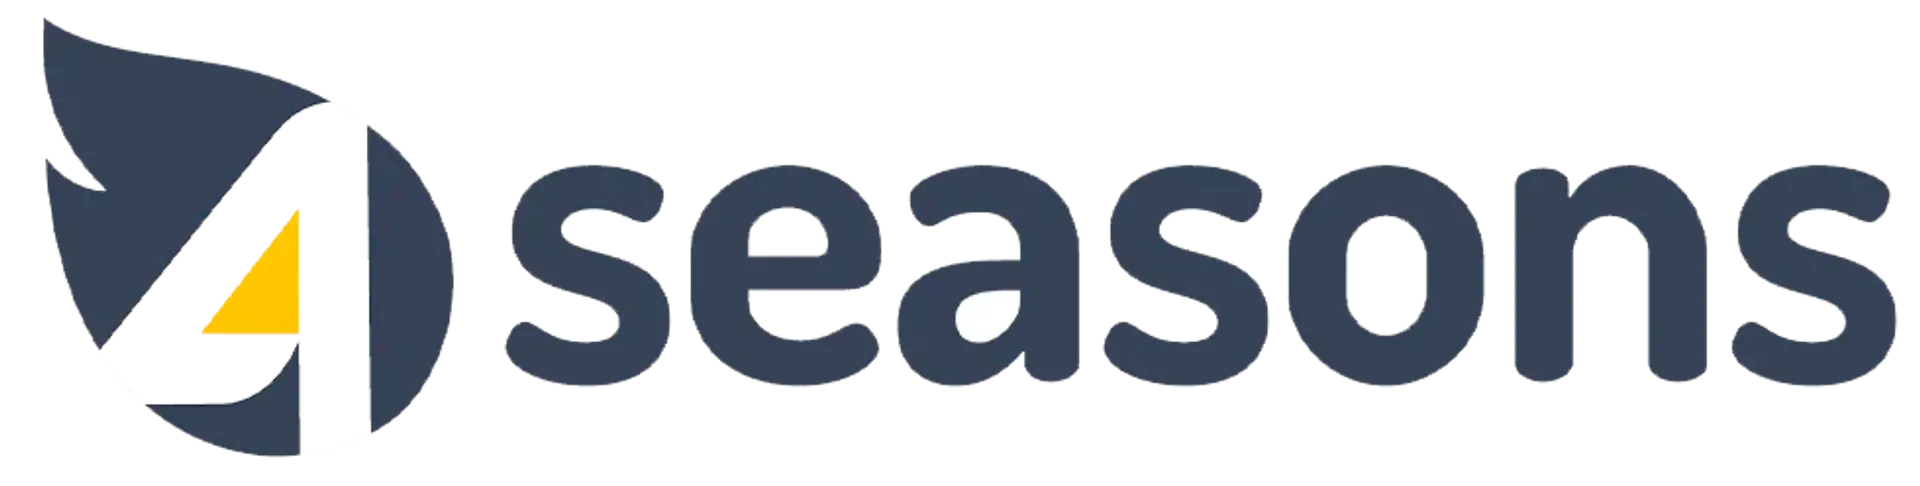 4 SEASONS logo. Current weekly ad